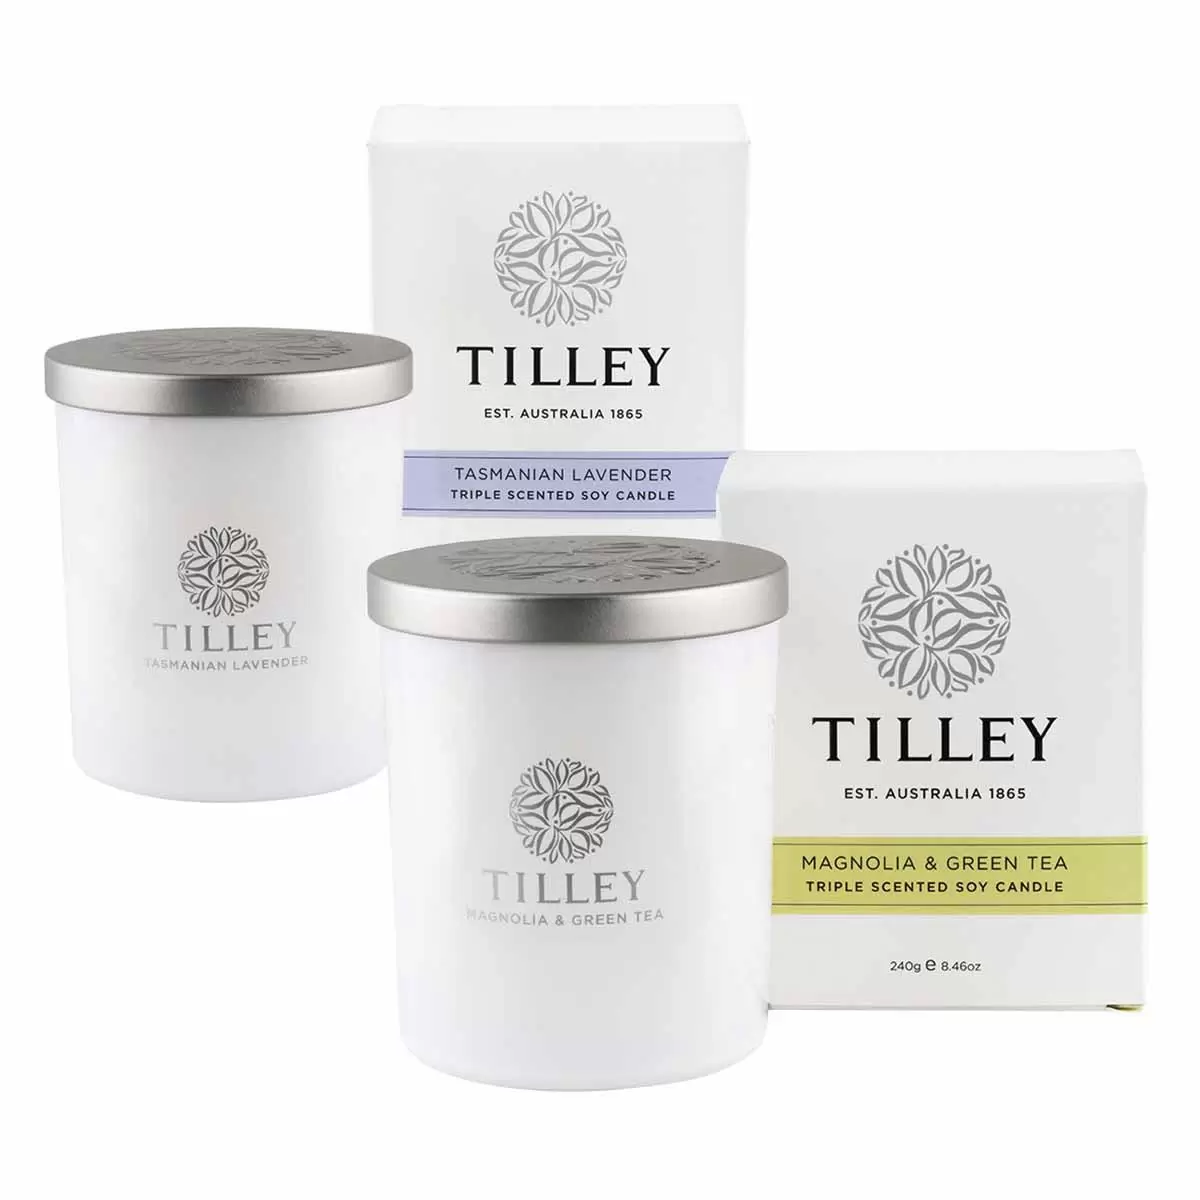 Tilley 微醺大豆香氛蠟燭2入組 木蘭與綠茶 + 塔斯馬尼亞薰衣草